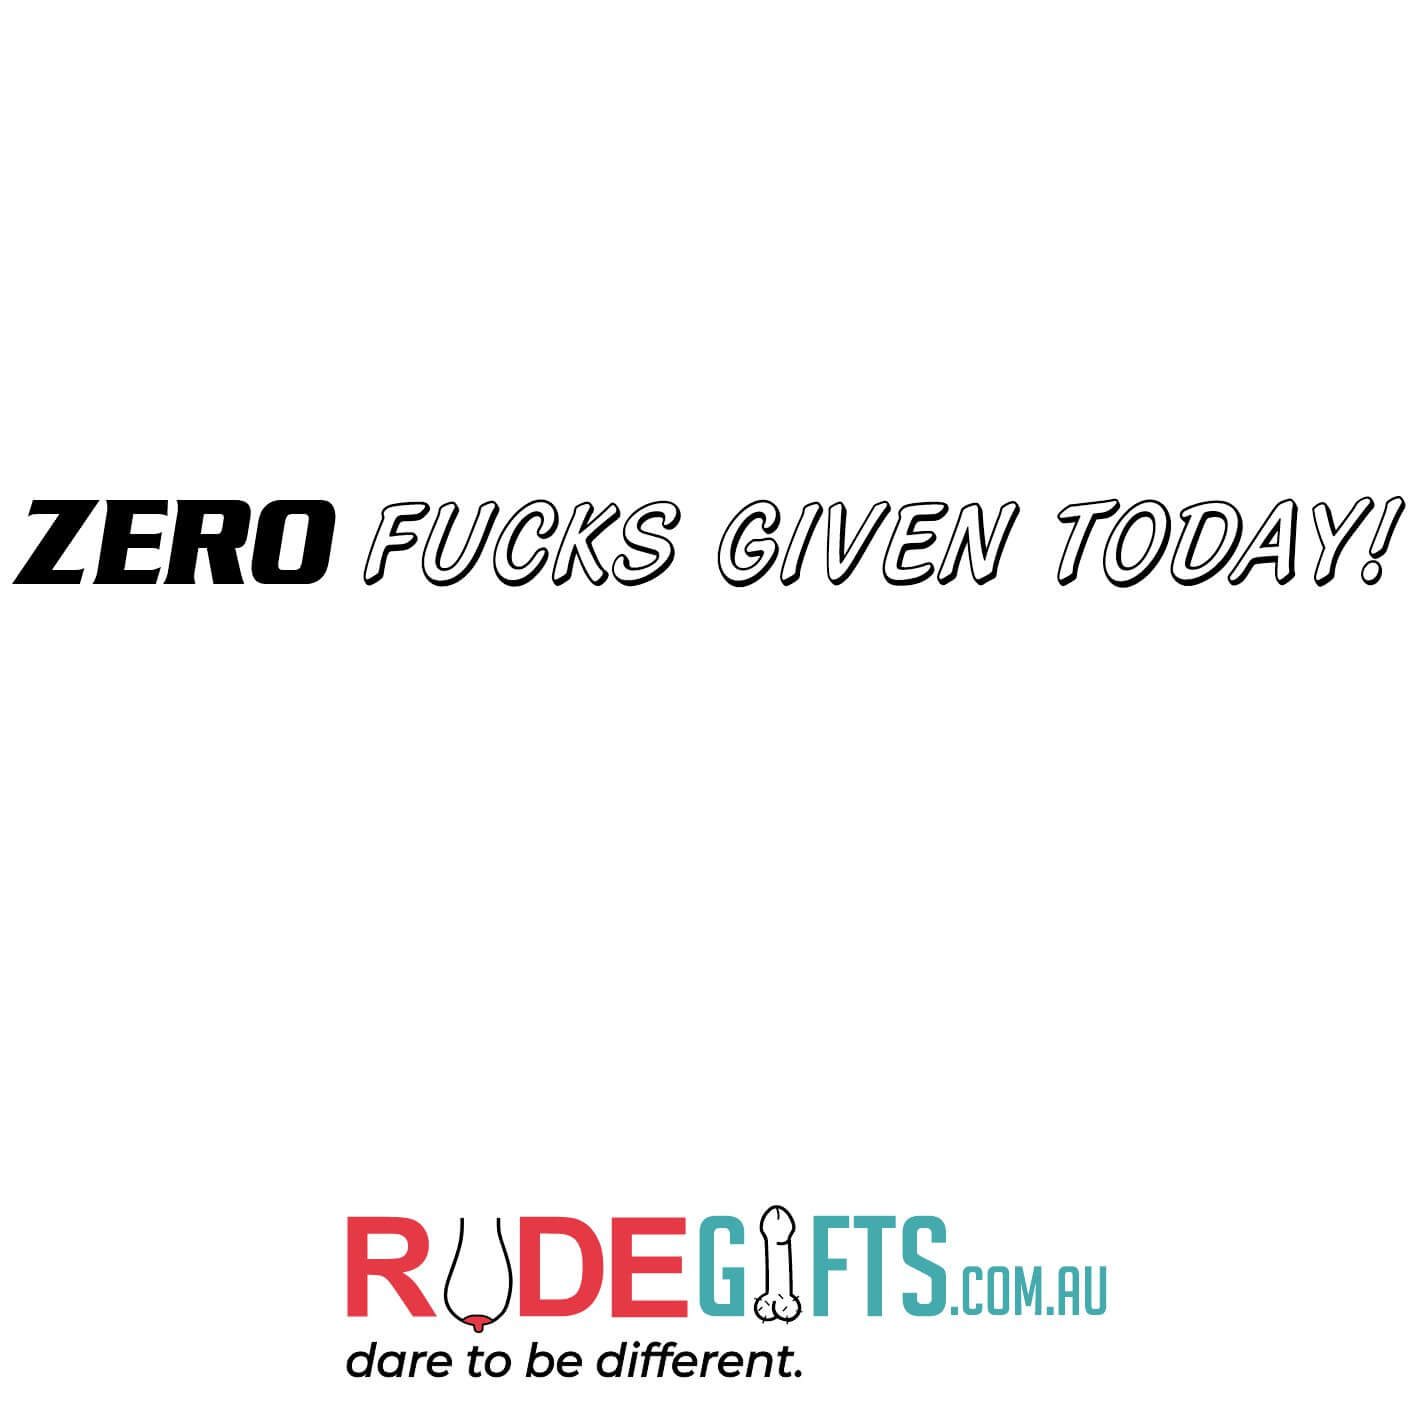 Zero fucks given today!